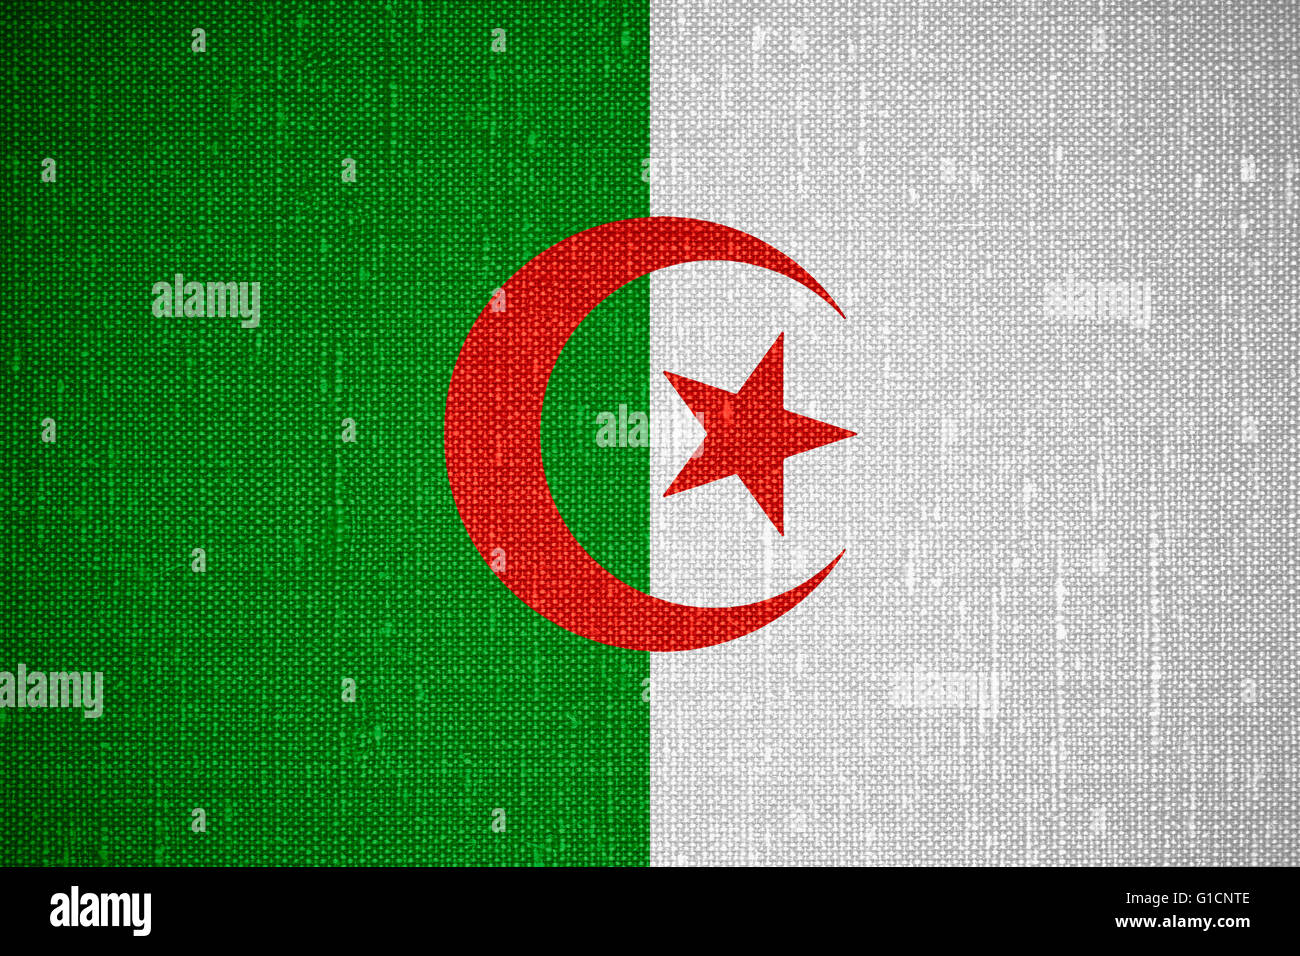 flag of Algeria or Algerian banner on cnavas background Stock Photo